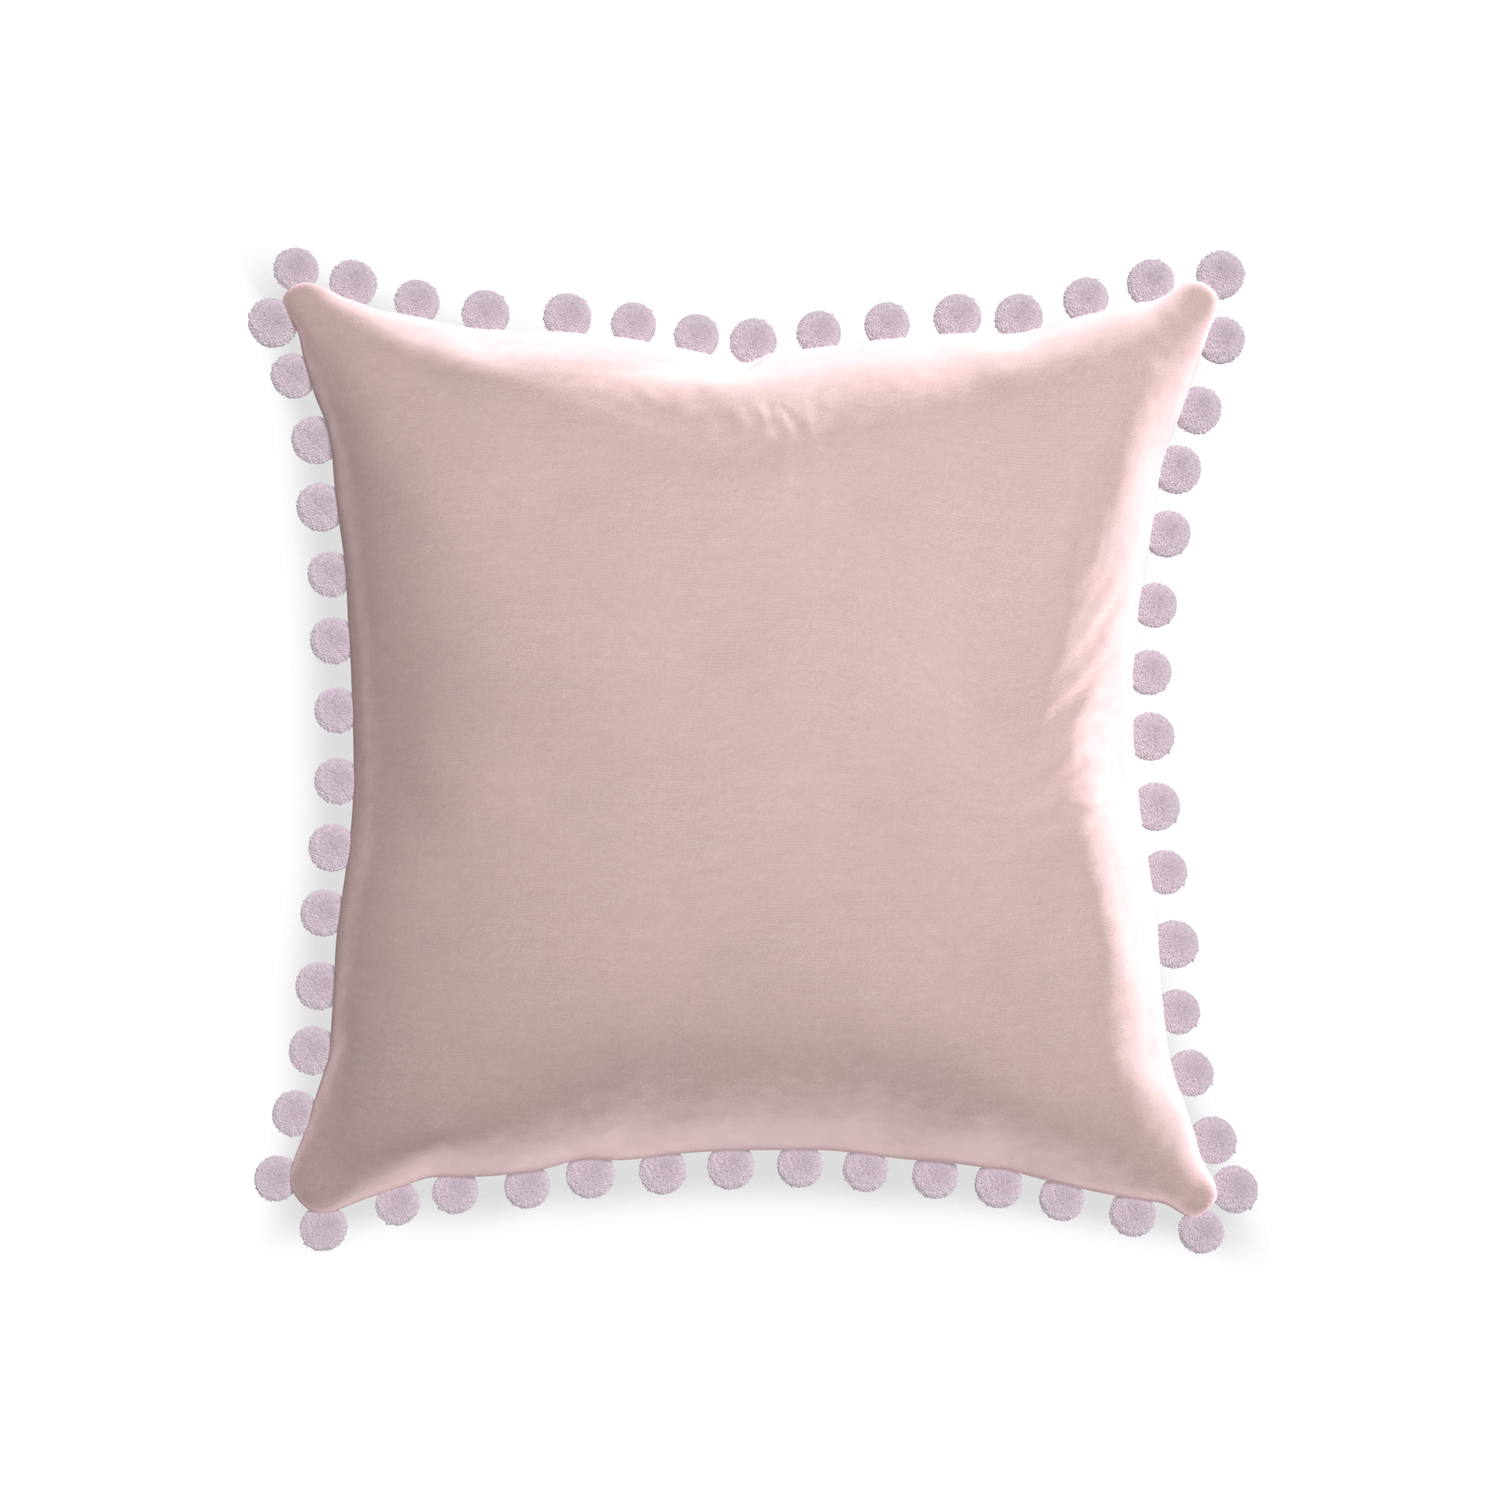 square light pink velvet pillow with lilac pom poms